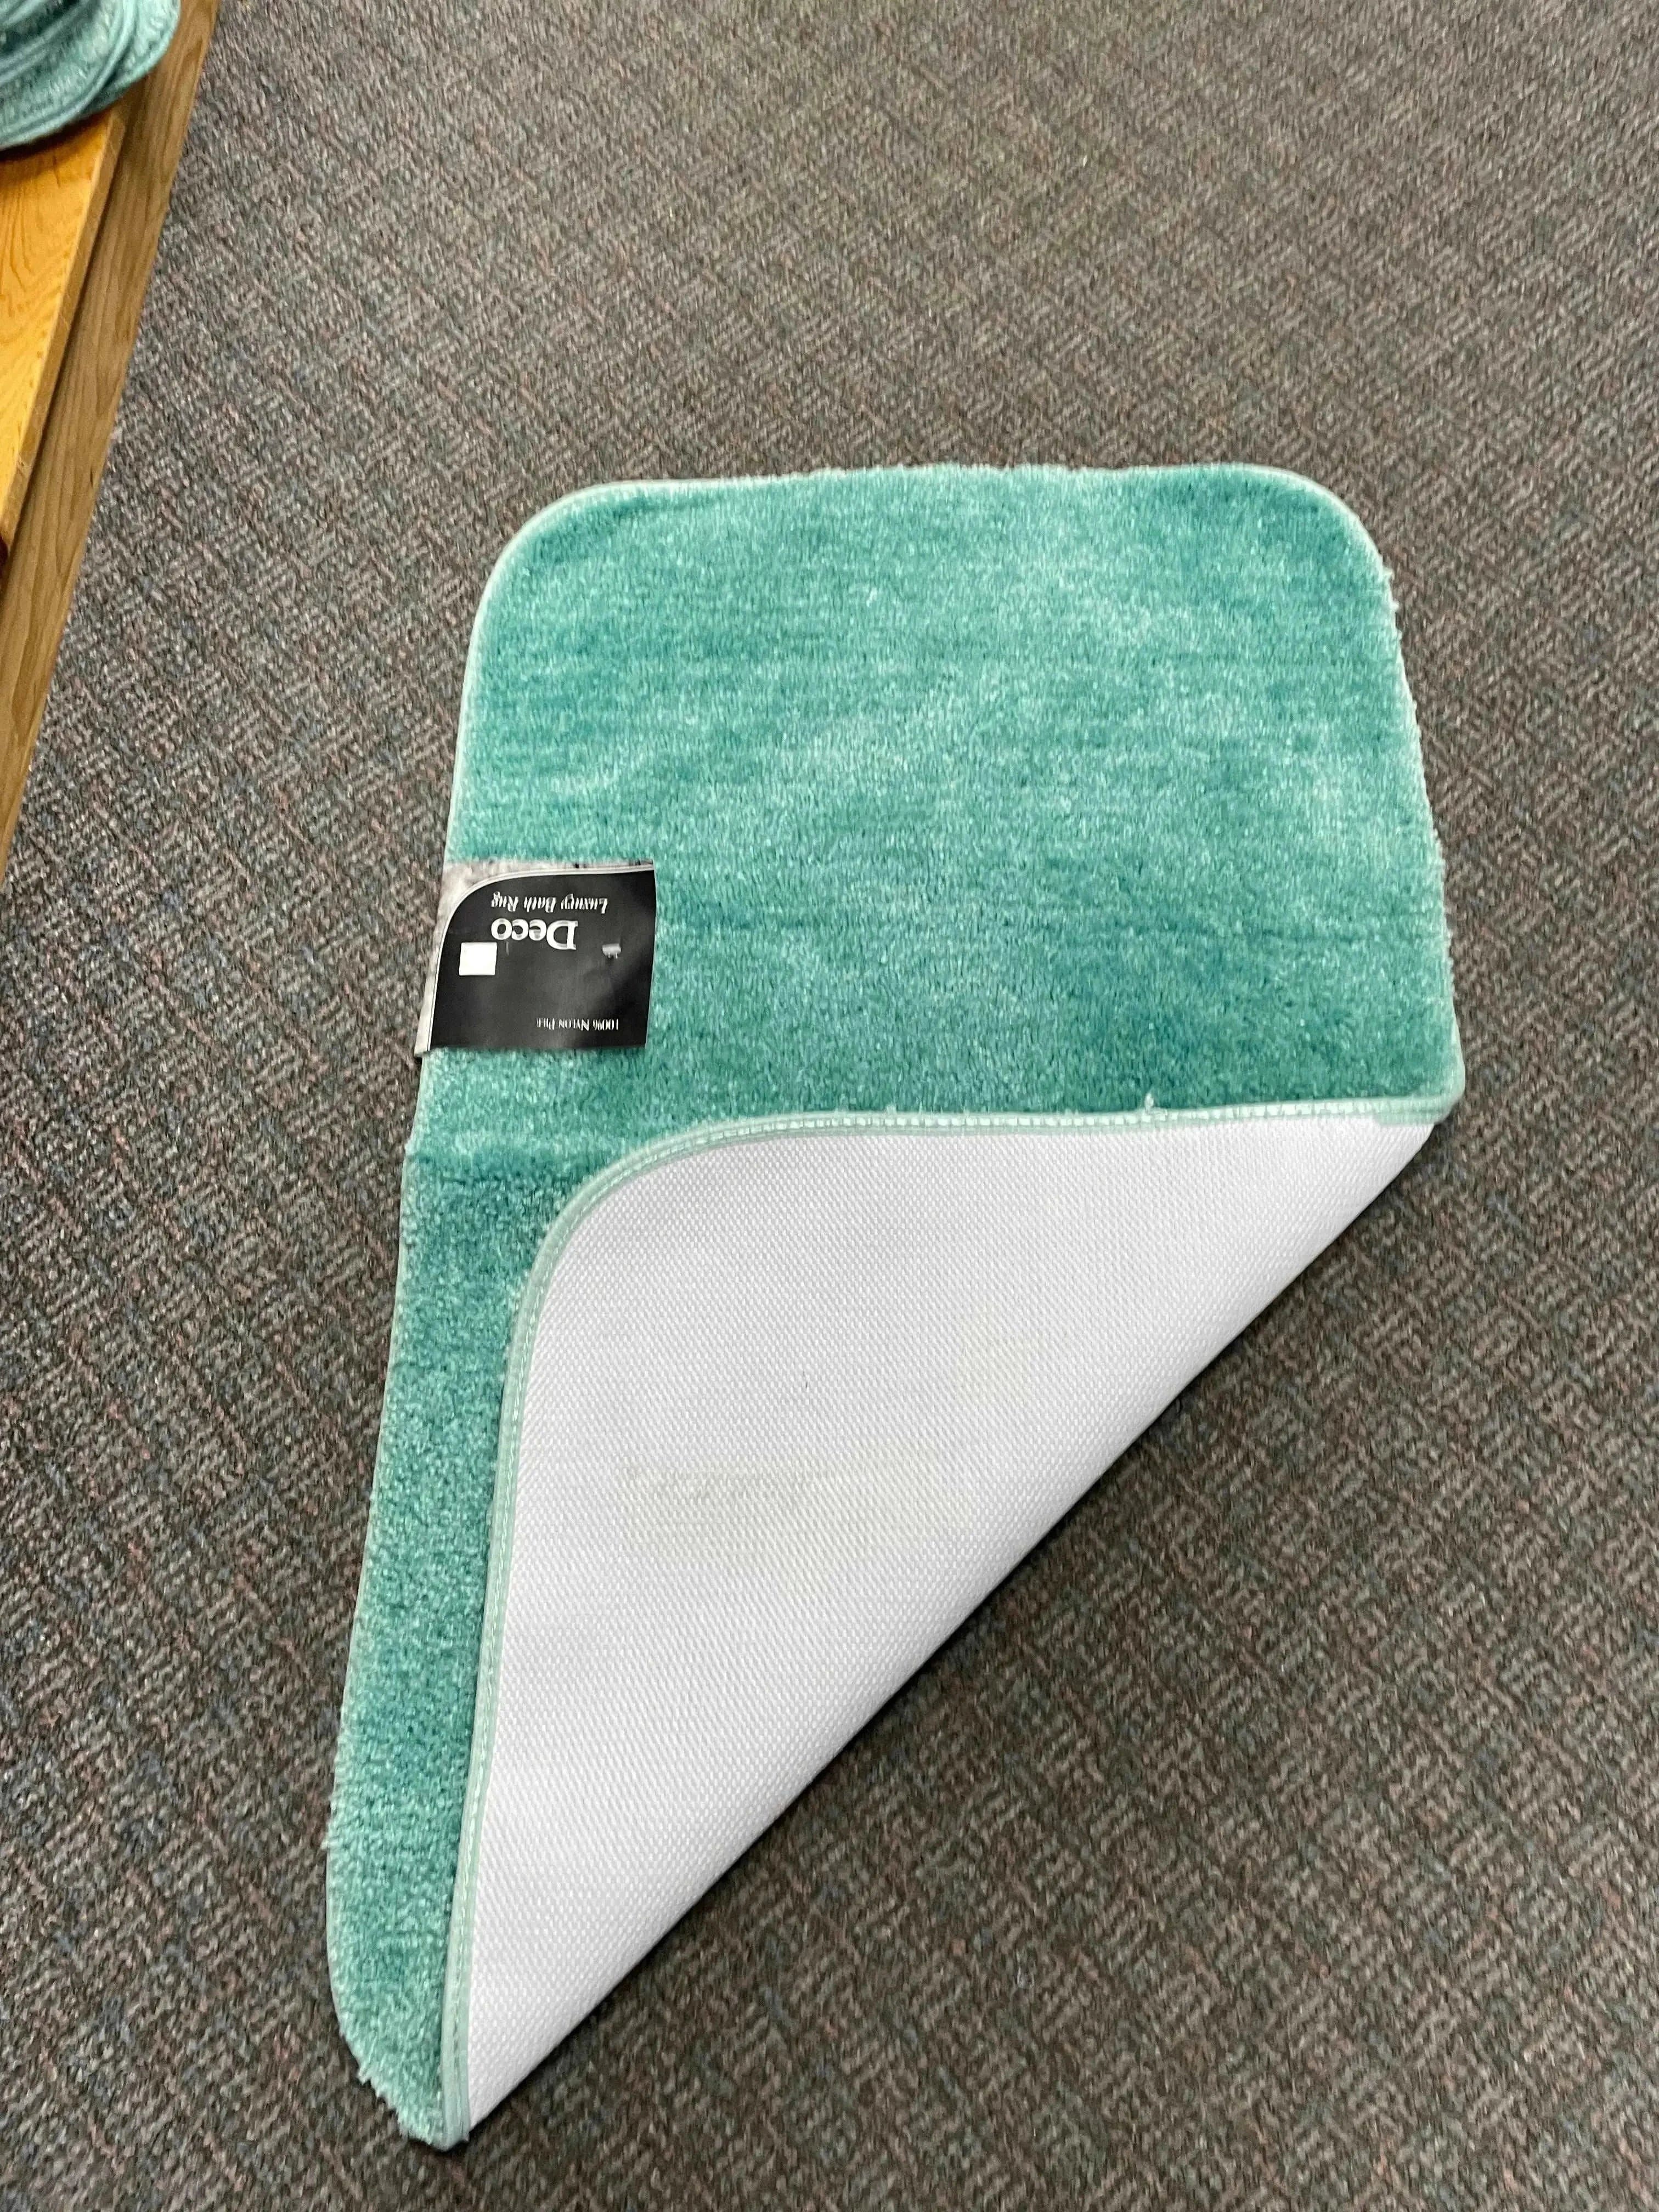 Linen World bathroom rugs Seafoam / 24x40 Thick bathroom rugs